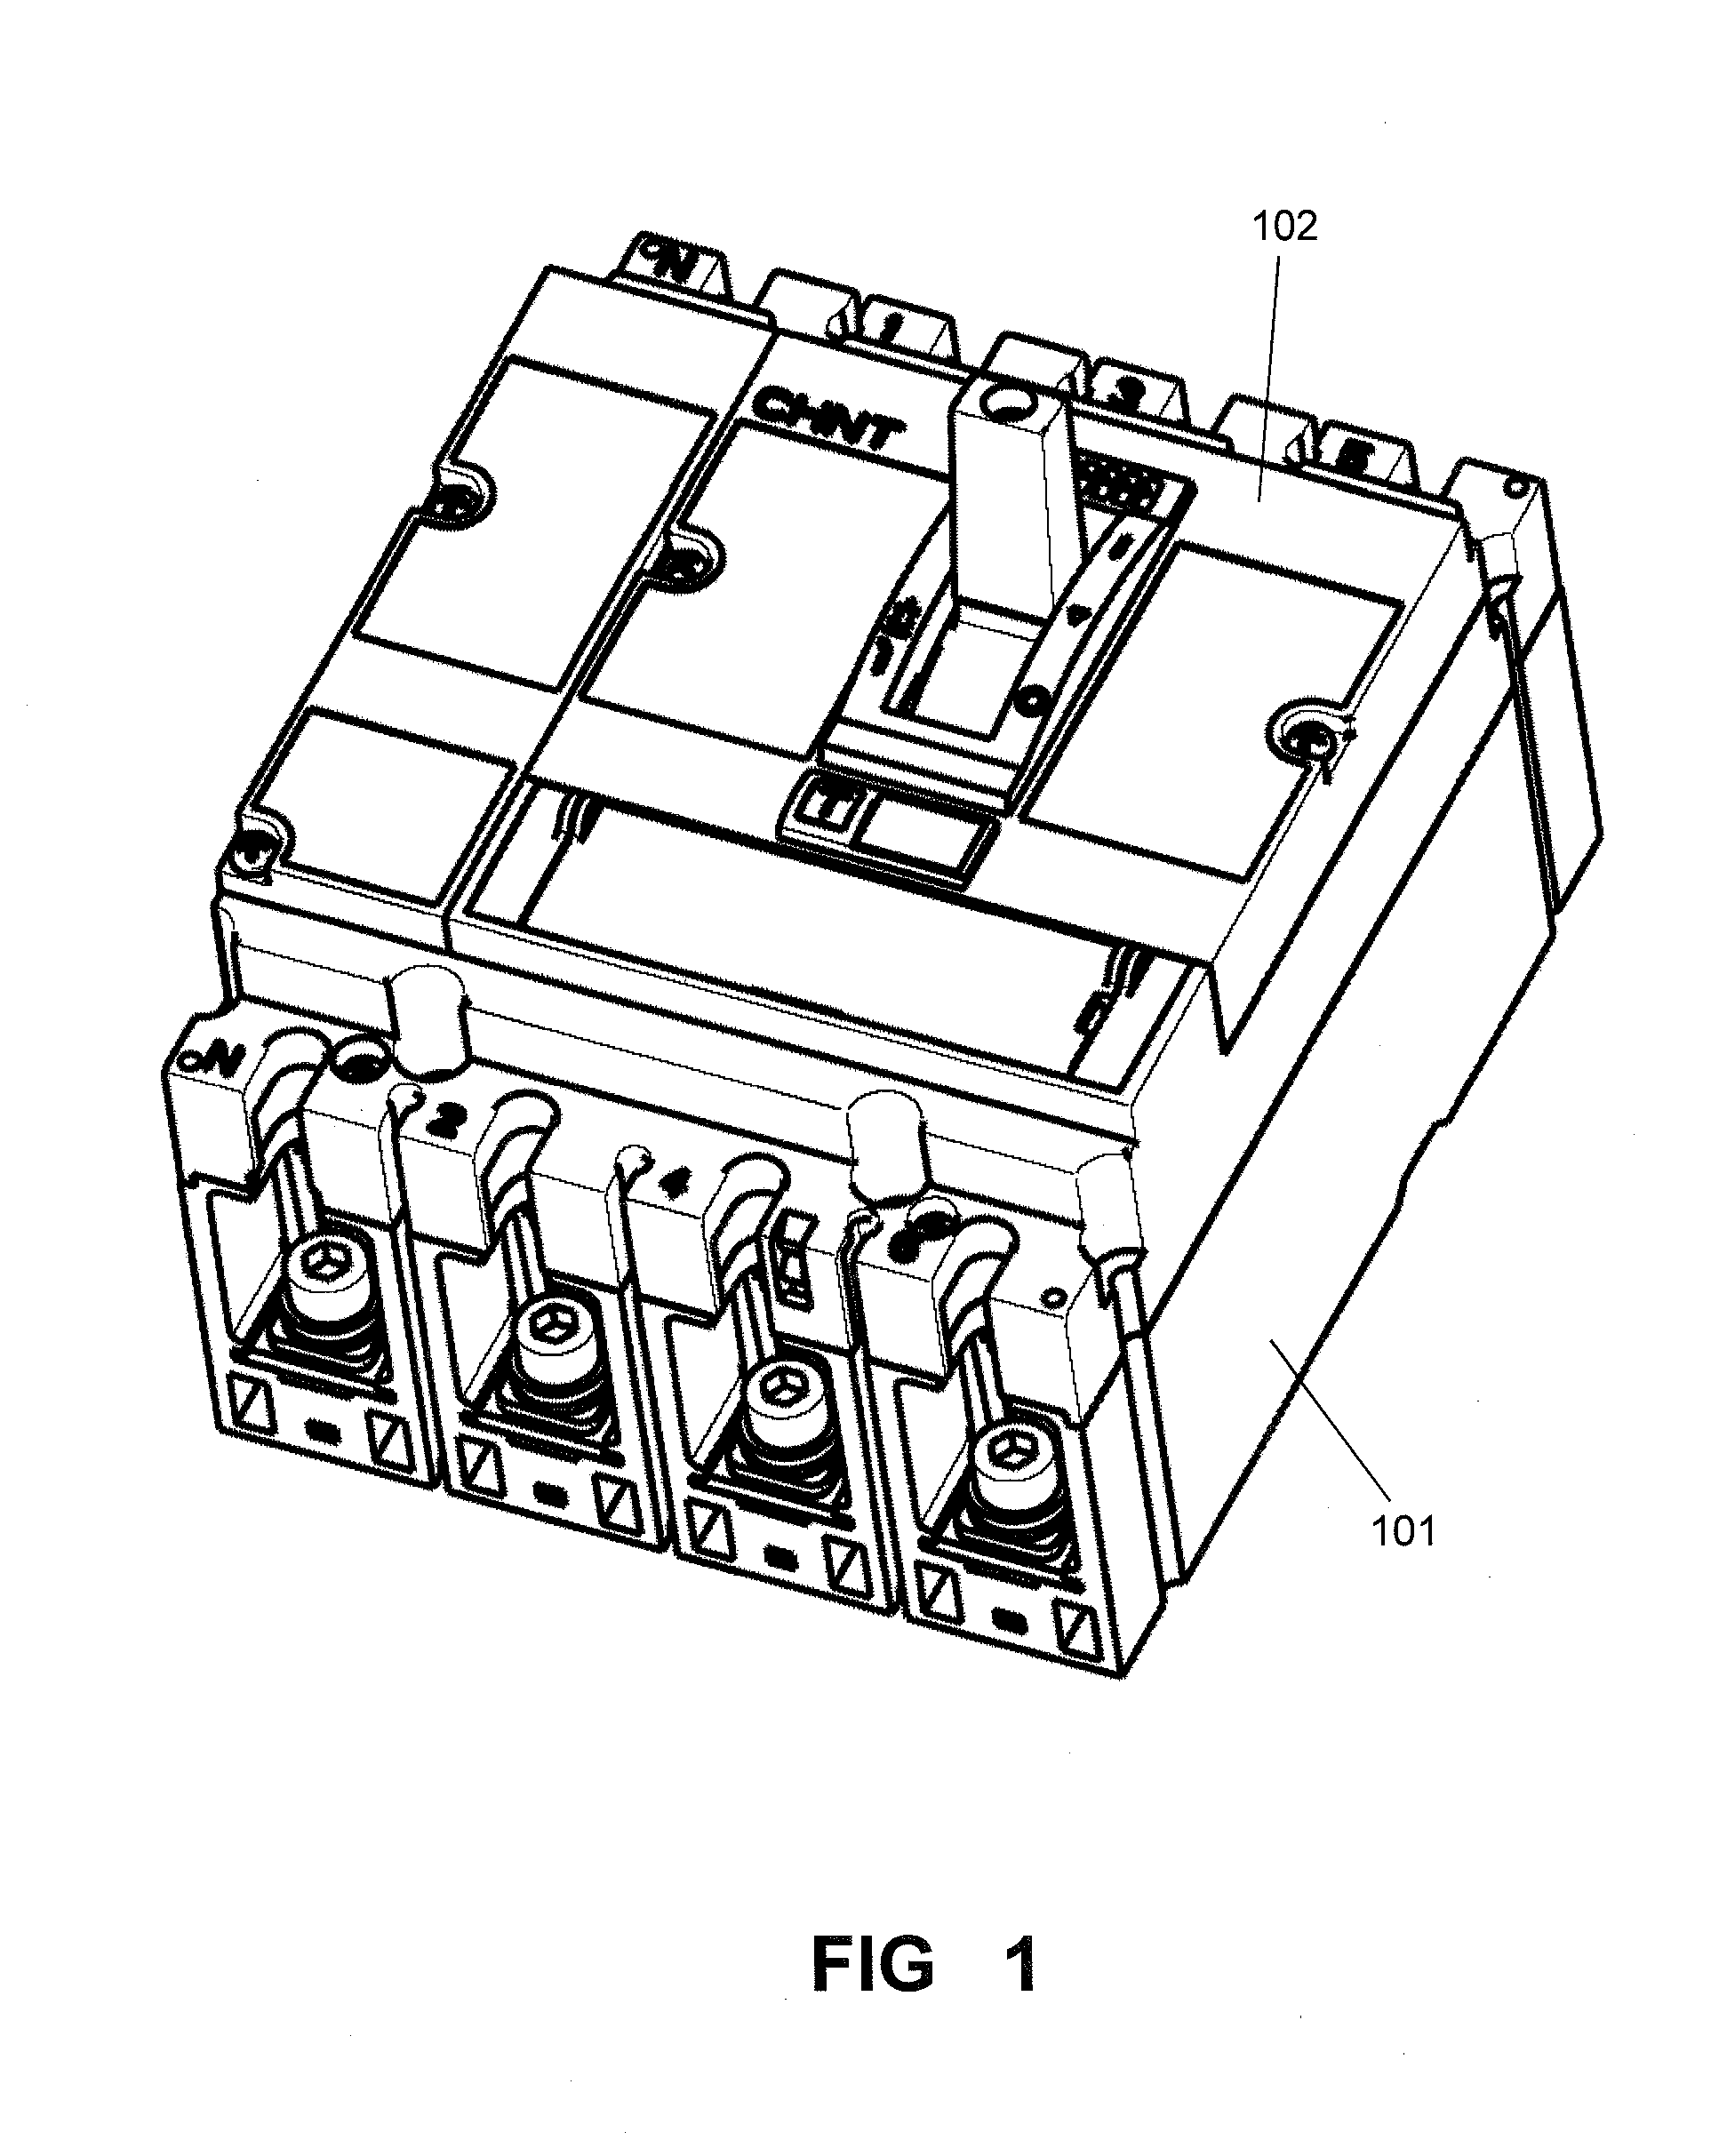 Contact module for circuit breaker